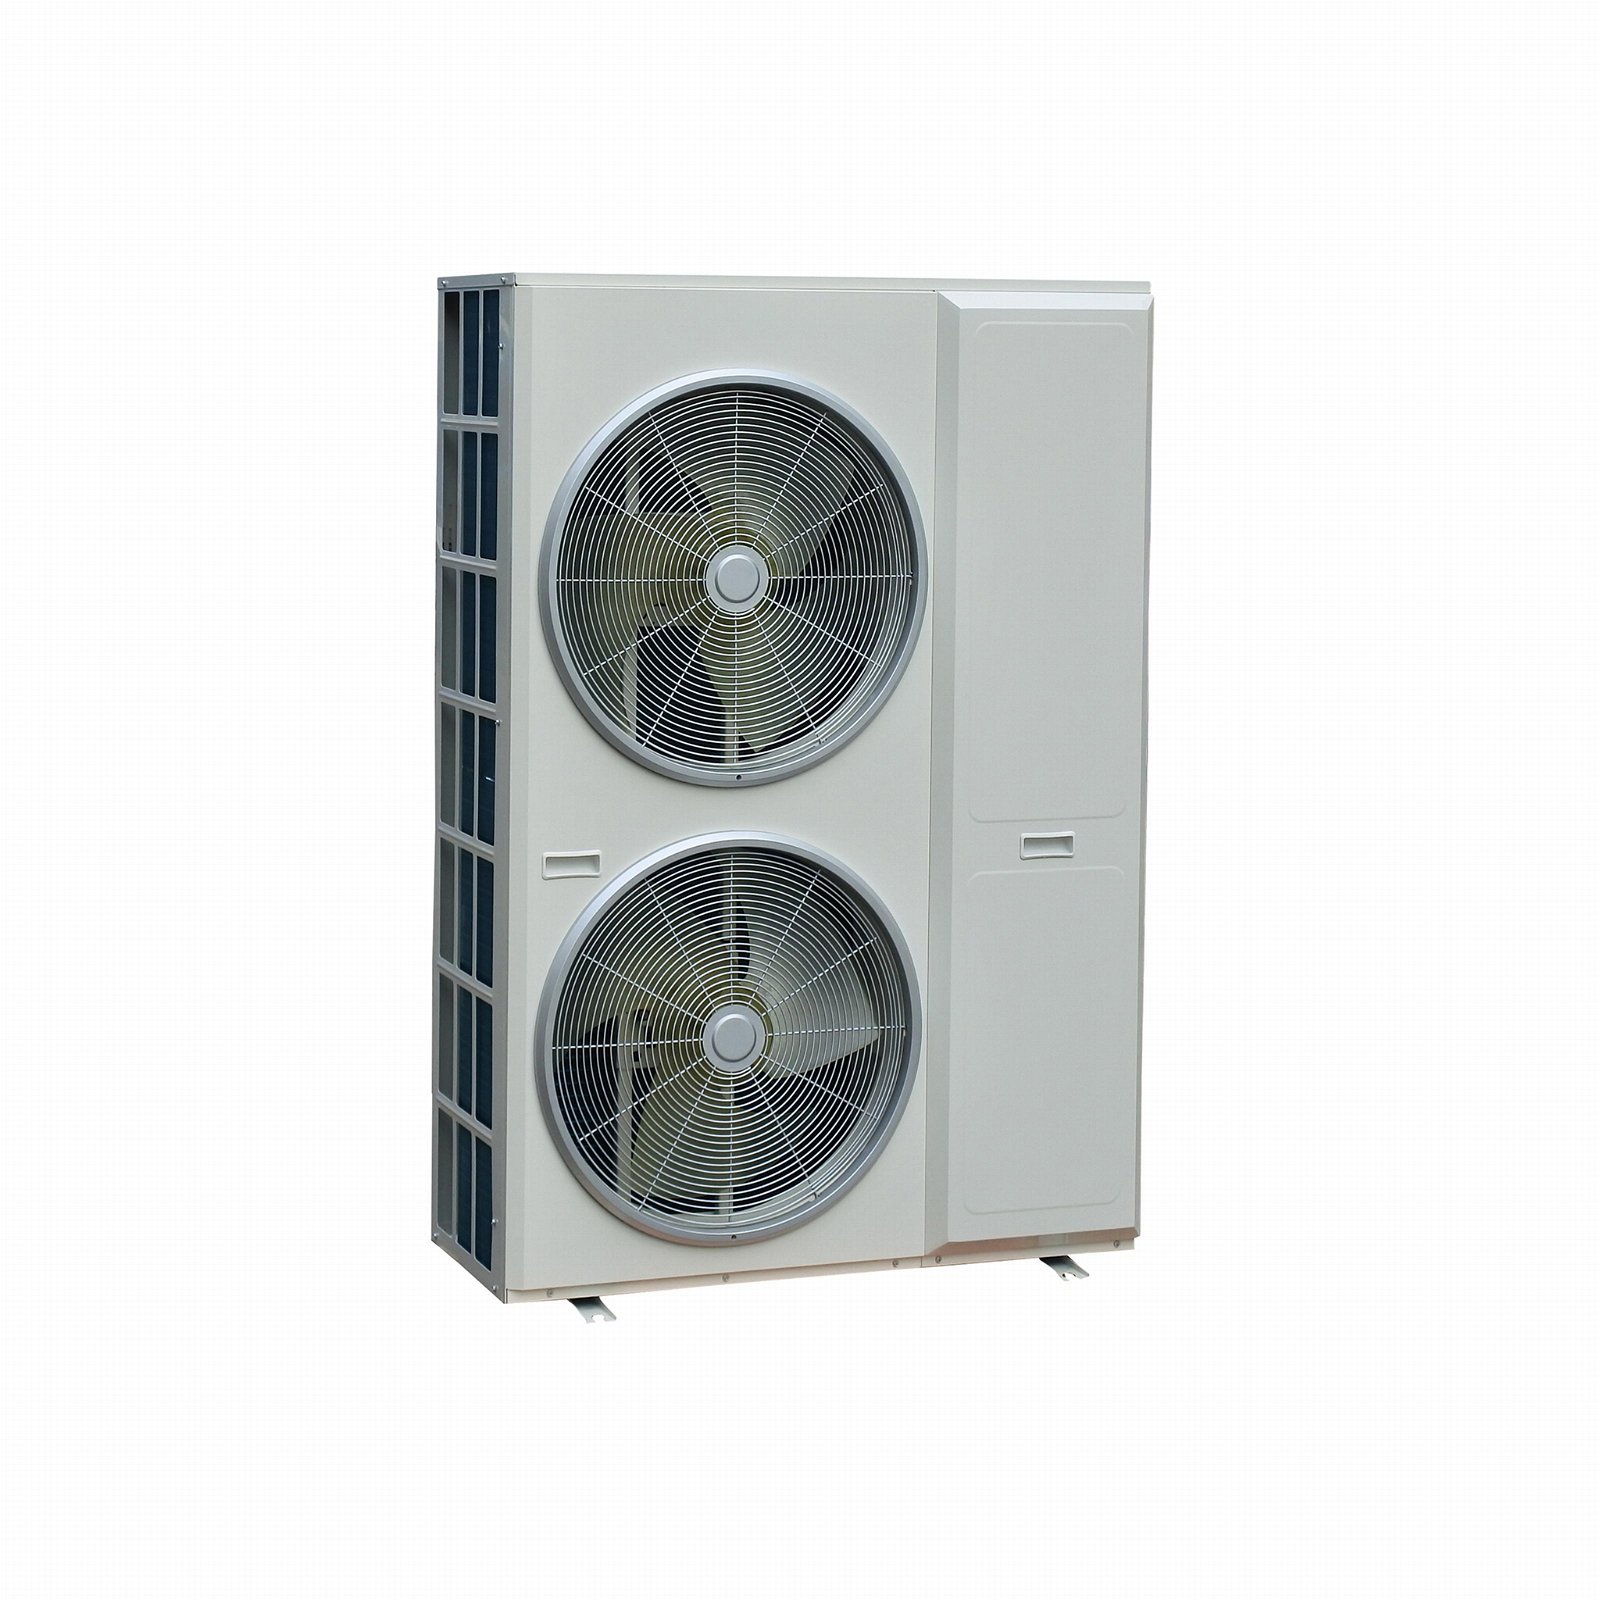 DC inverter EVI heat pump 20KW 3